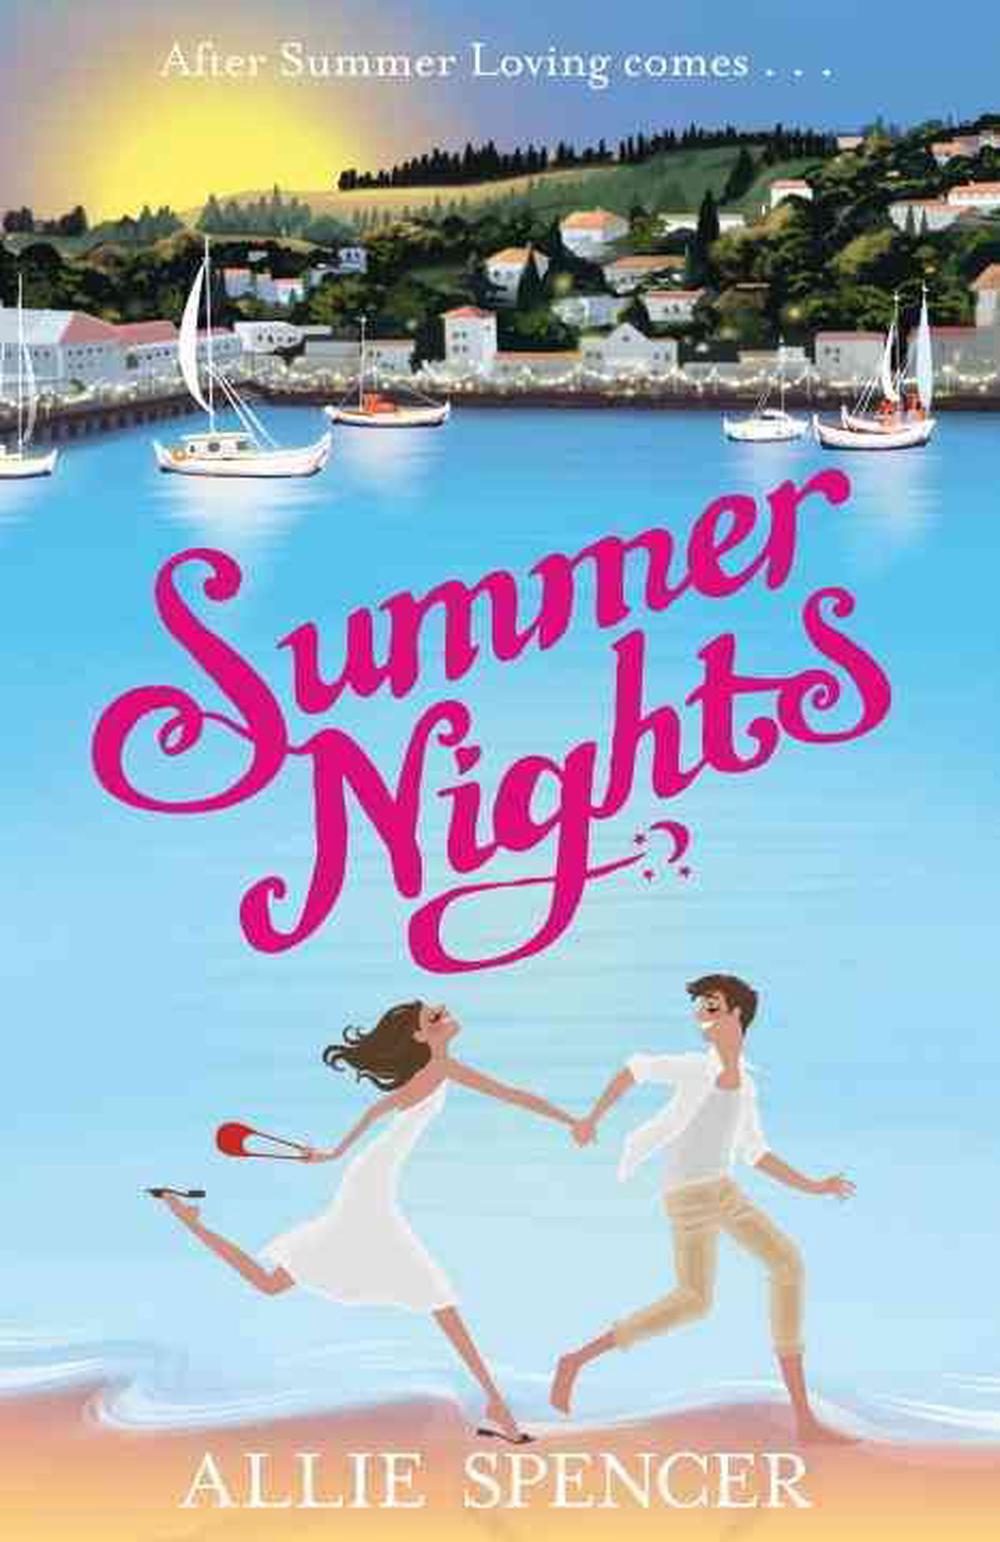 Seven Summer Nights by Harper Fox